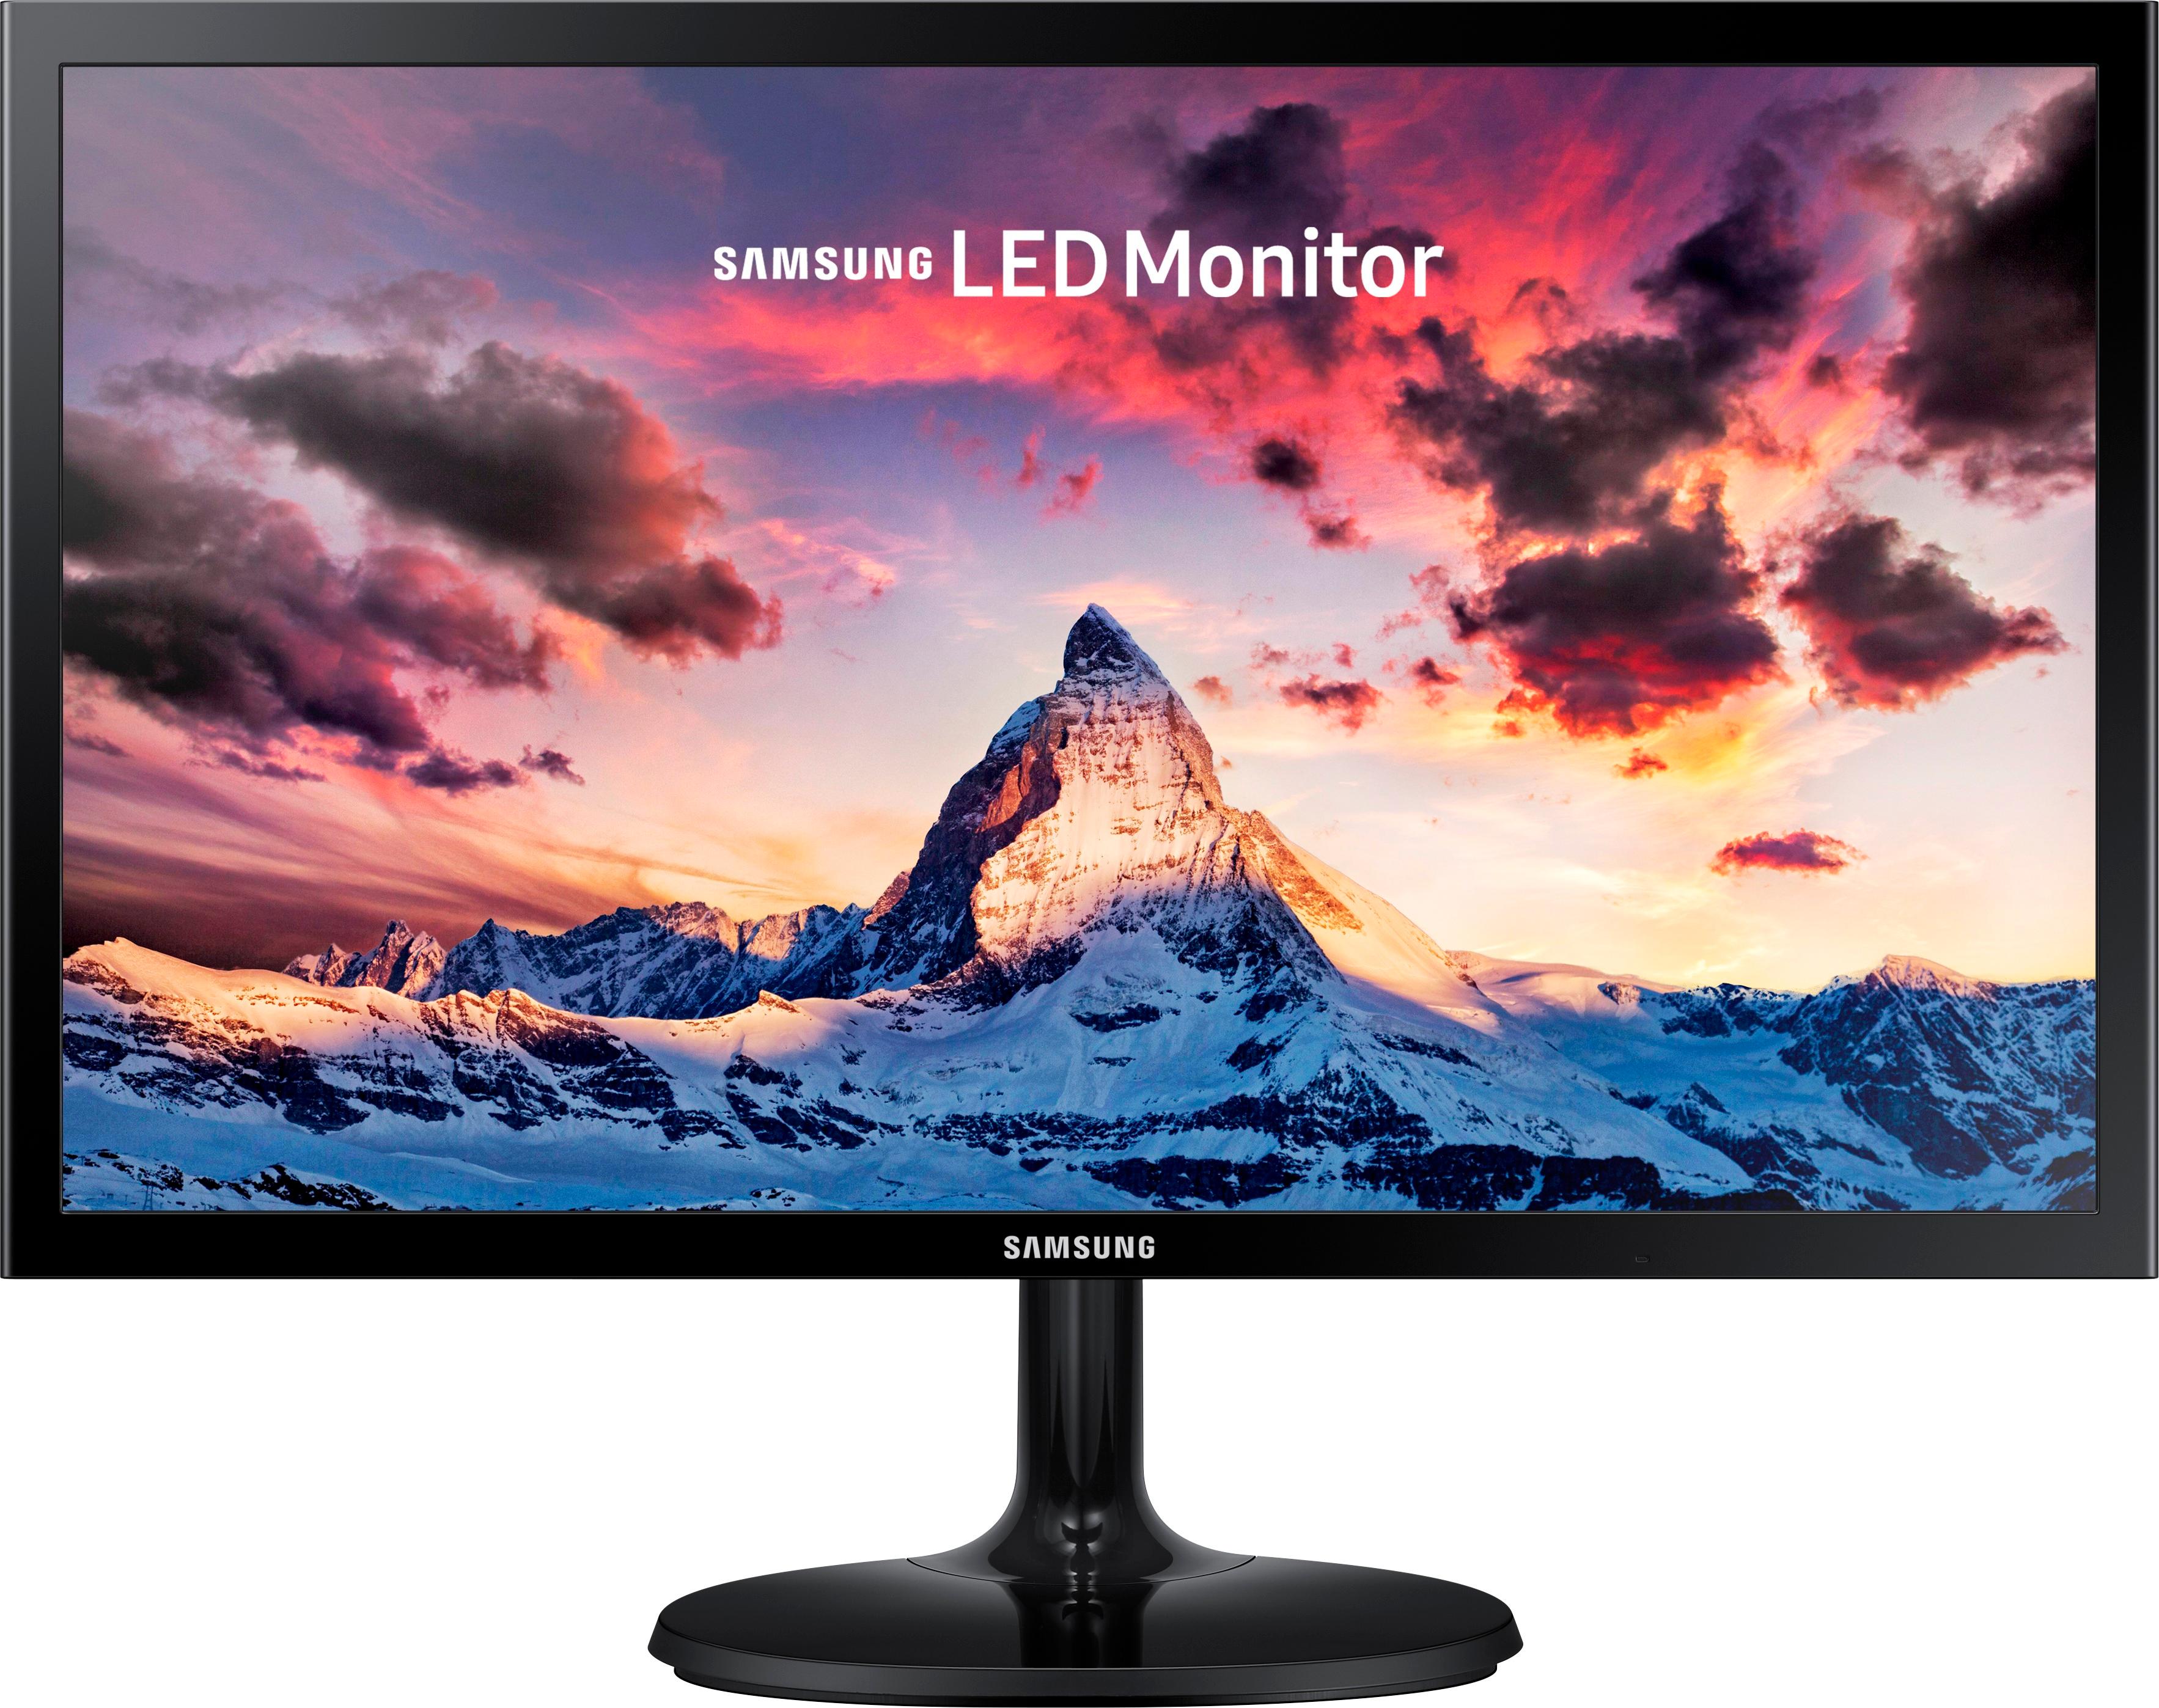 Samsung 22" LED FHD Monitor glossy black S22F350FHN - Buy